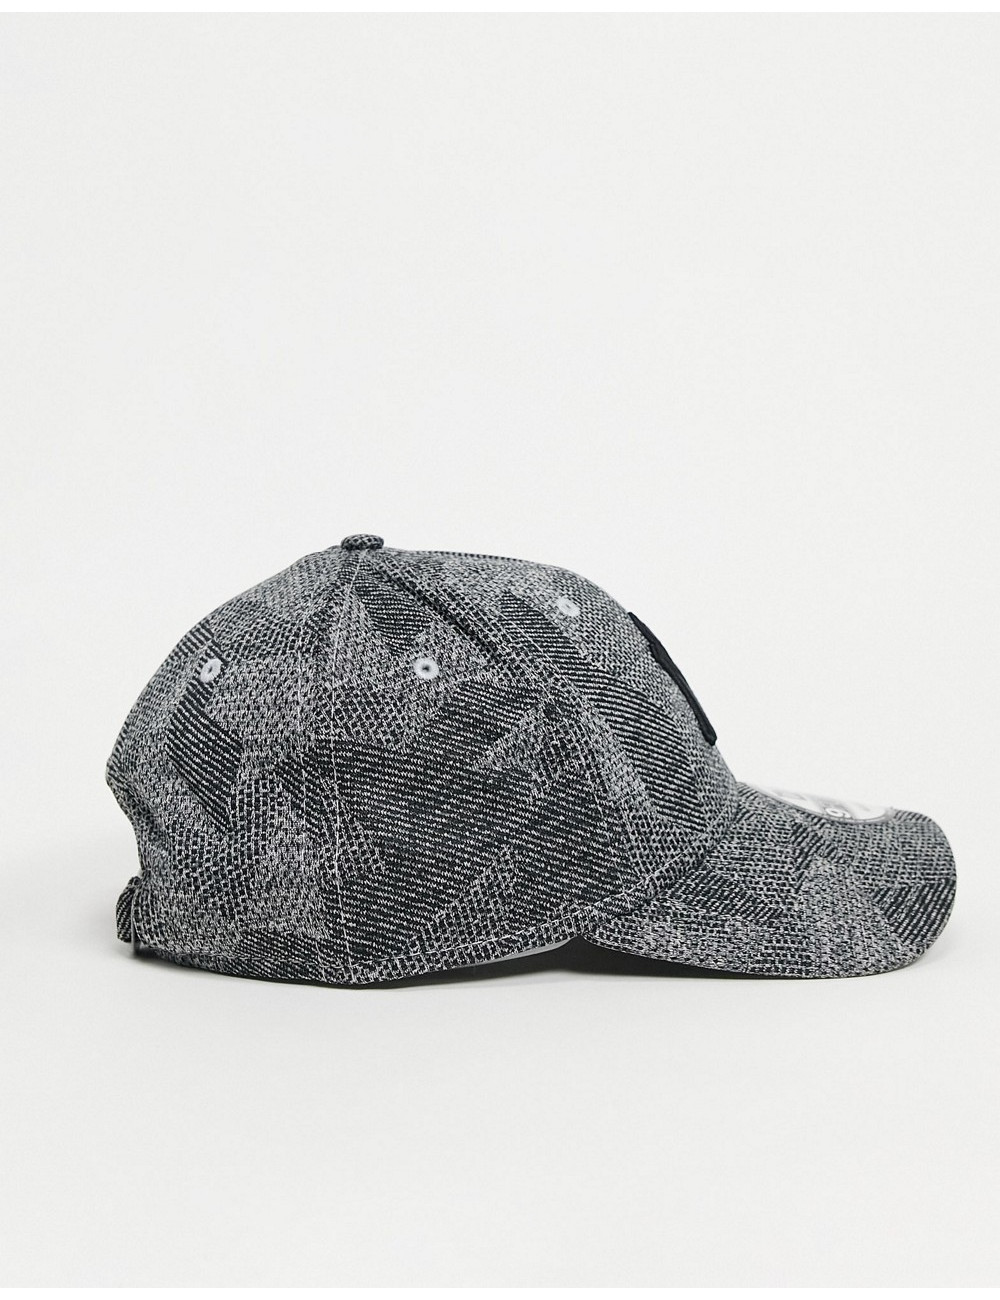 New Era 9forty cap in grey